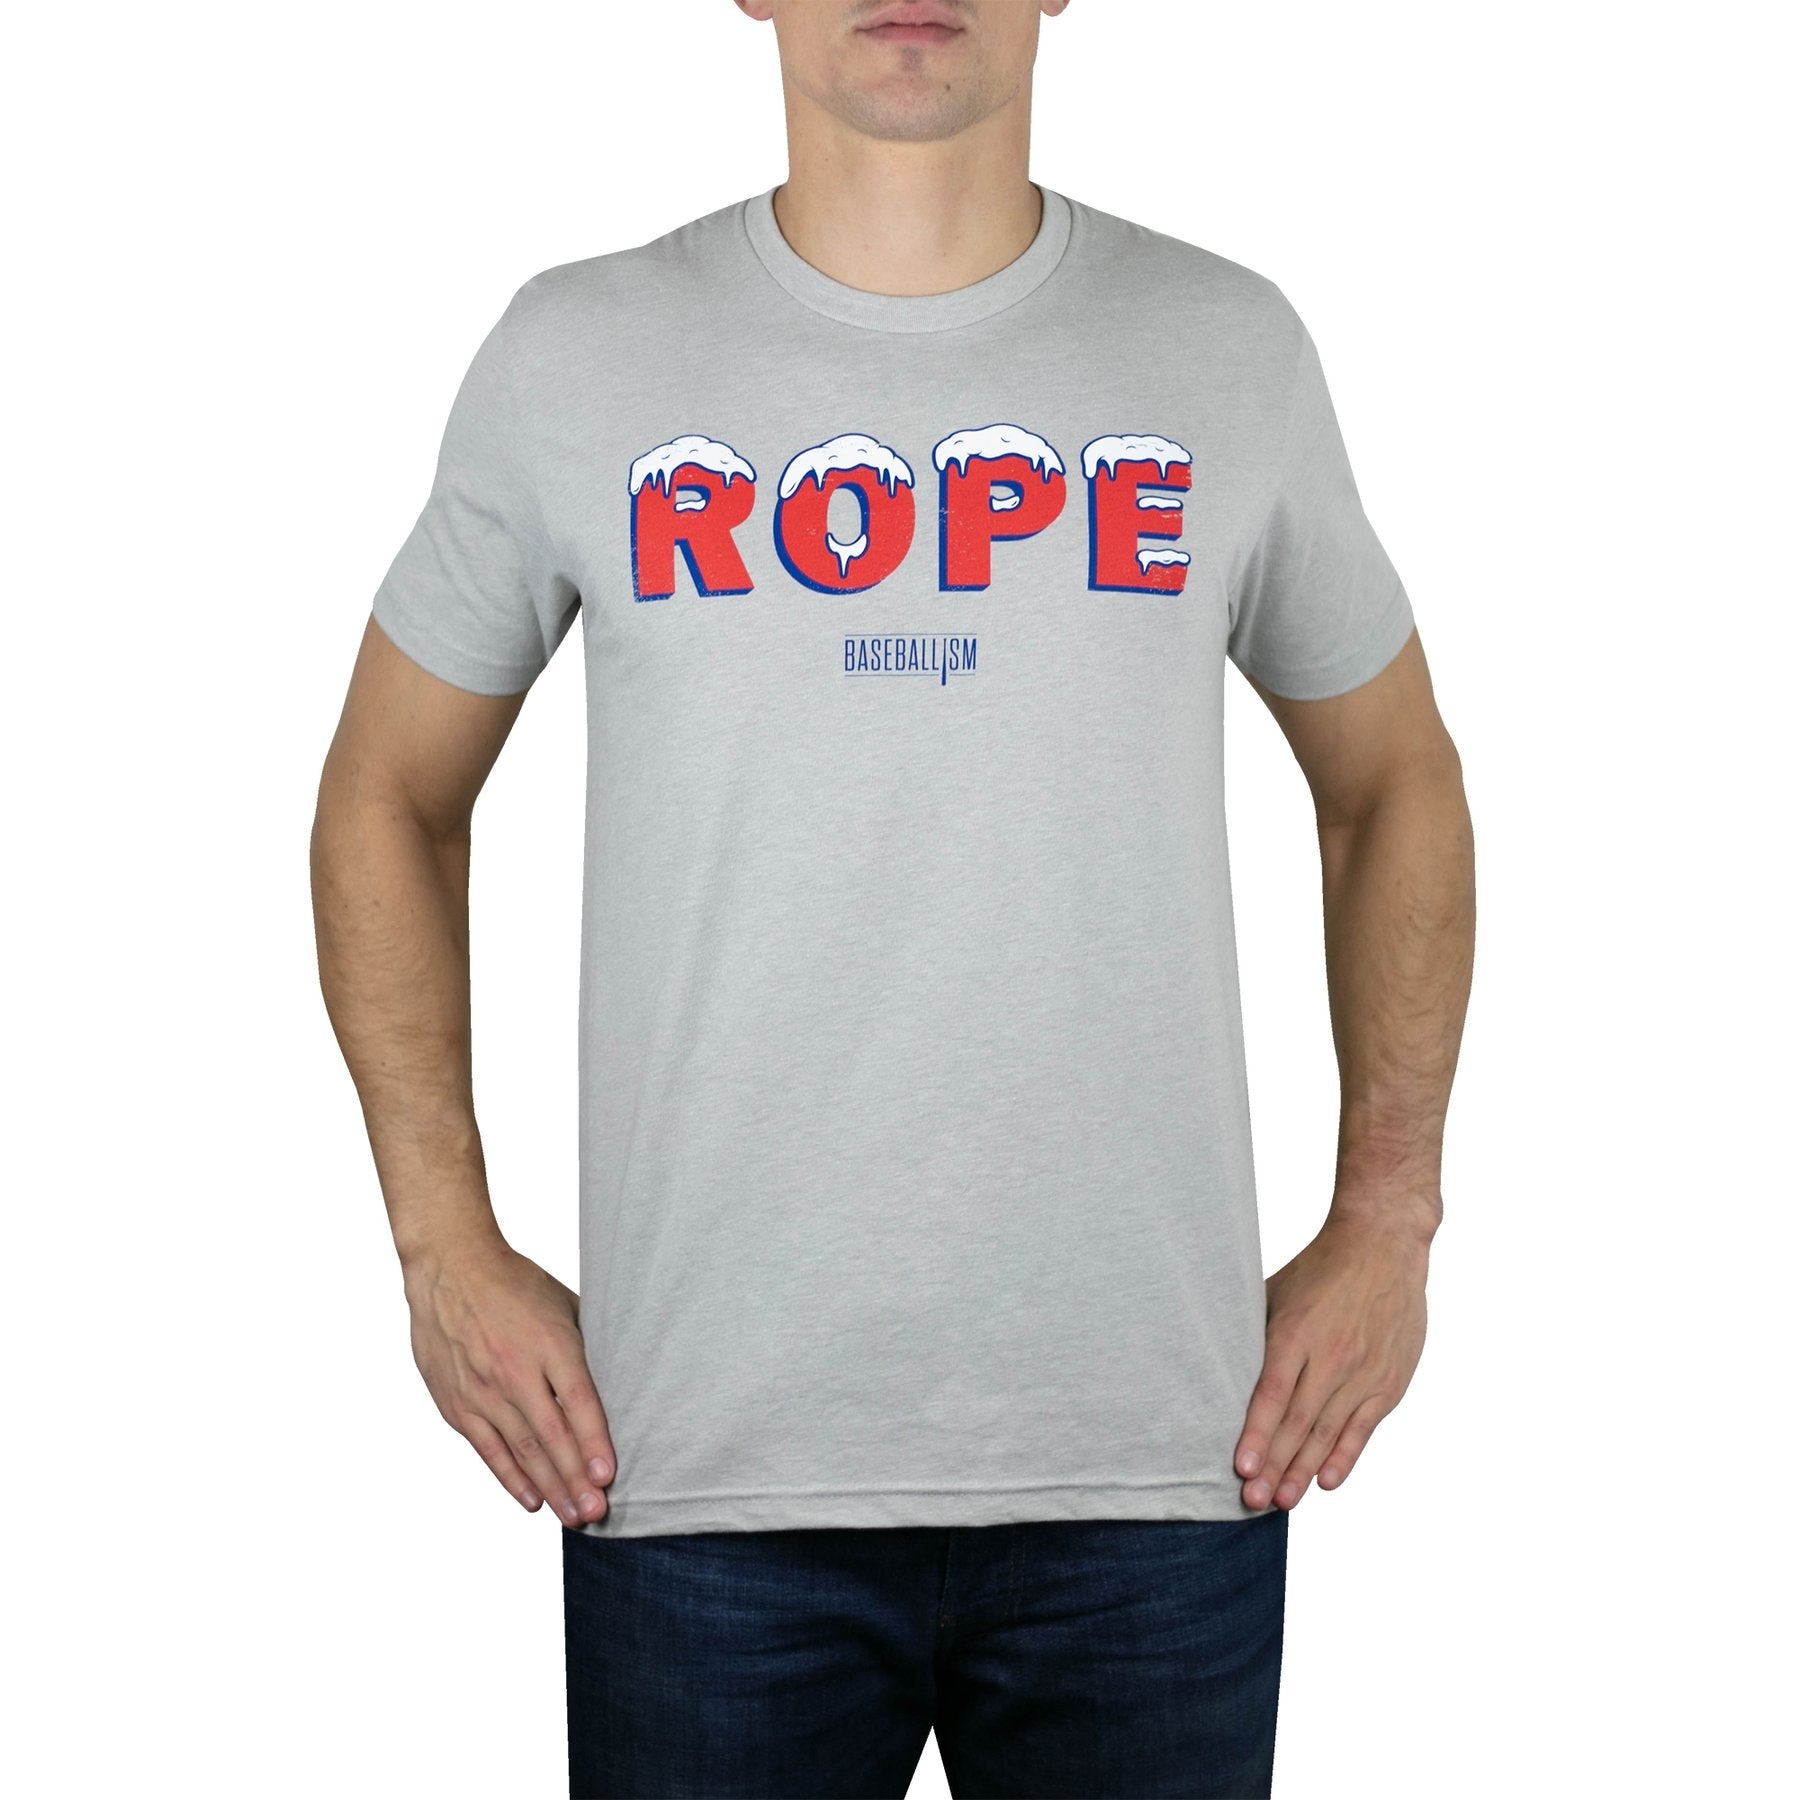 Baseballism - Frozen Rope T-Shirt (Men's)